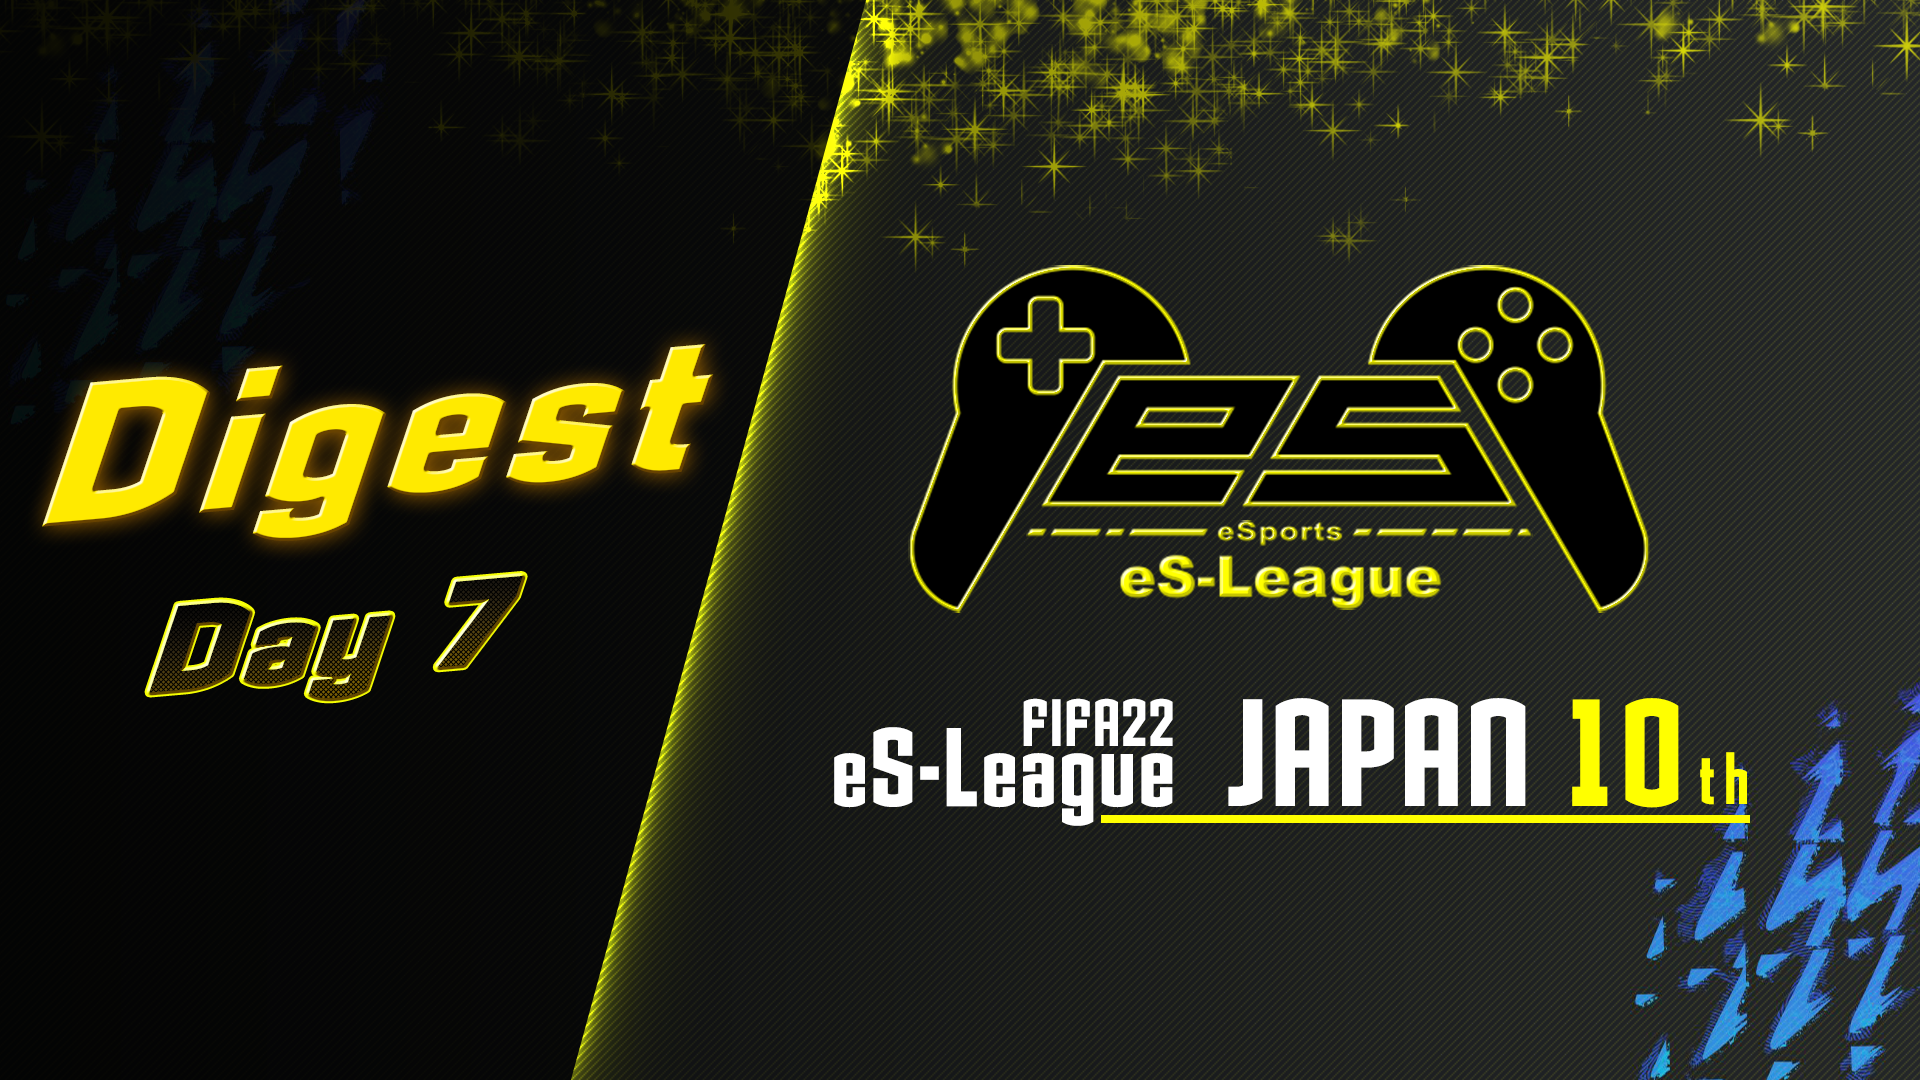 FIFA22 eS-League JAPAN 10th DAY7 ダイジェスト